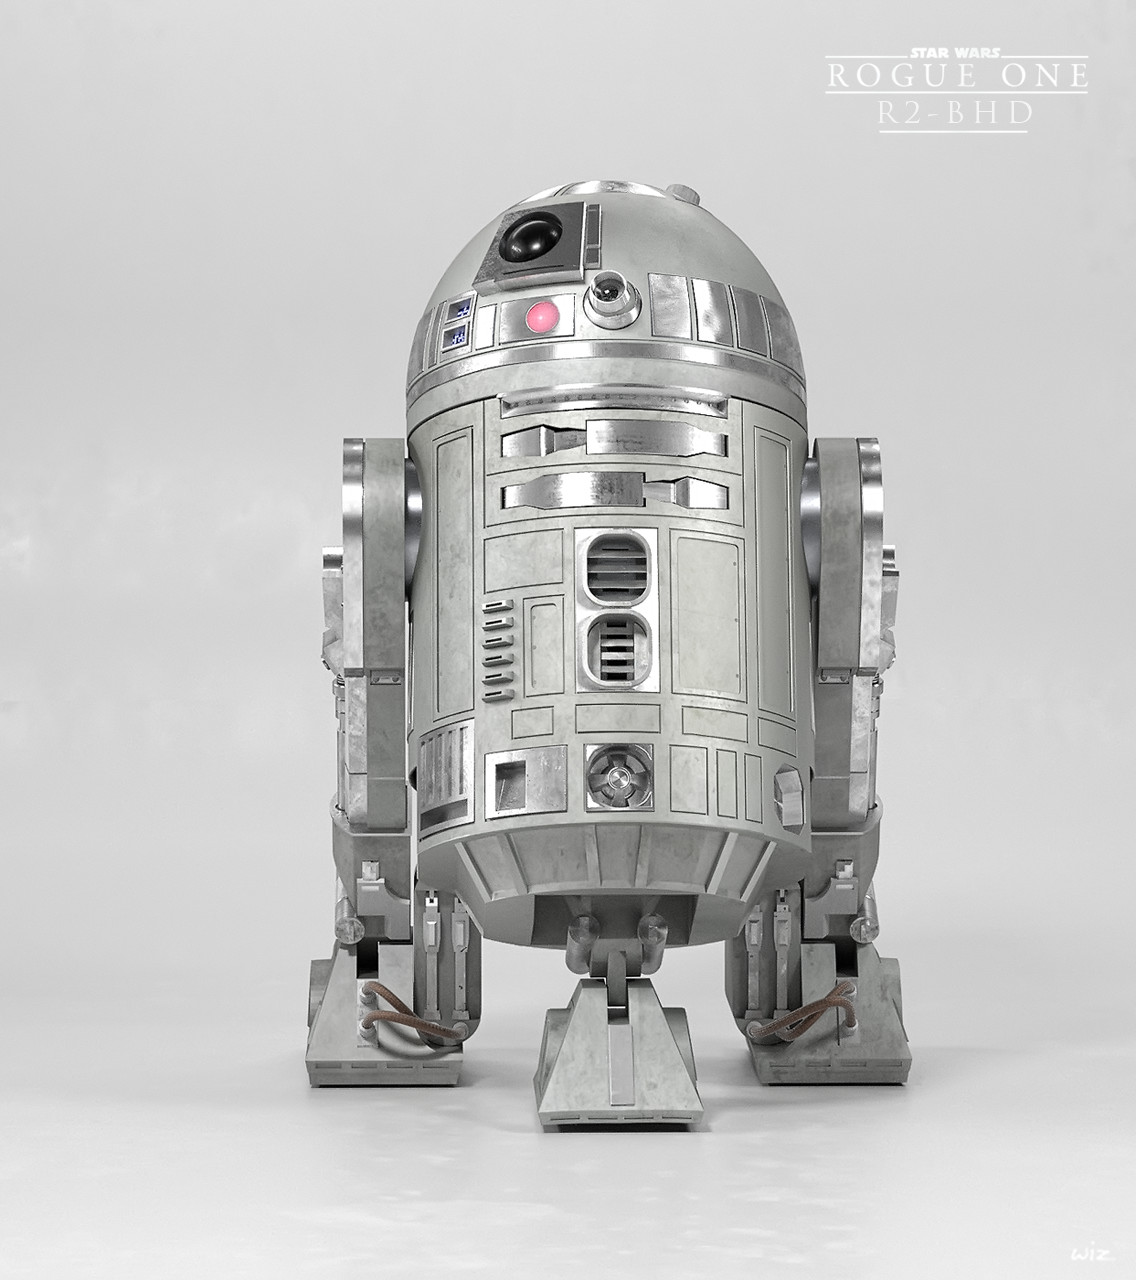 Rogue One R2-BHD